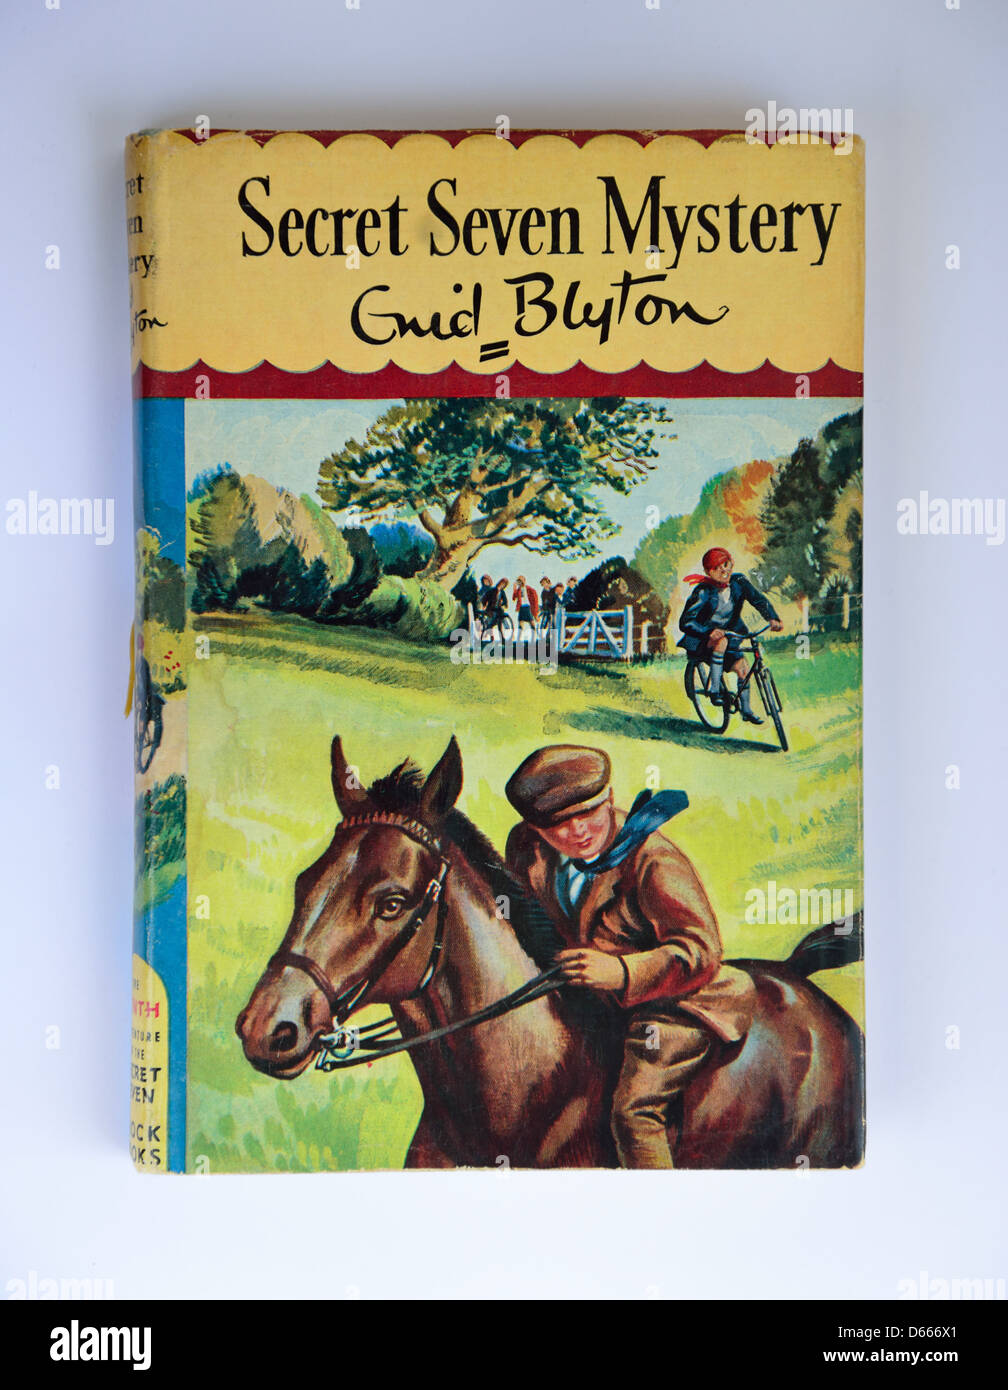 Enid Blyton's 'Secret Seven Mystery' Secret Seven book, Ascot, Windsor, Berkshire, England, United Kingdom Stock Photo